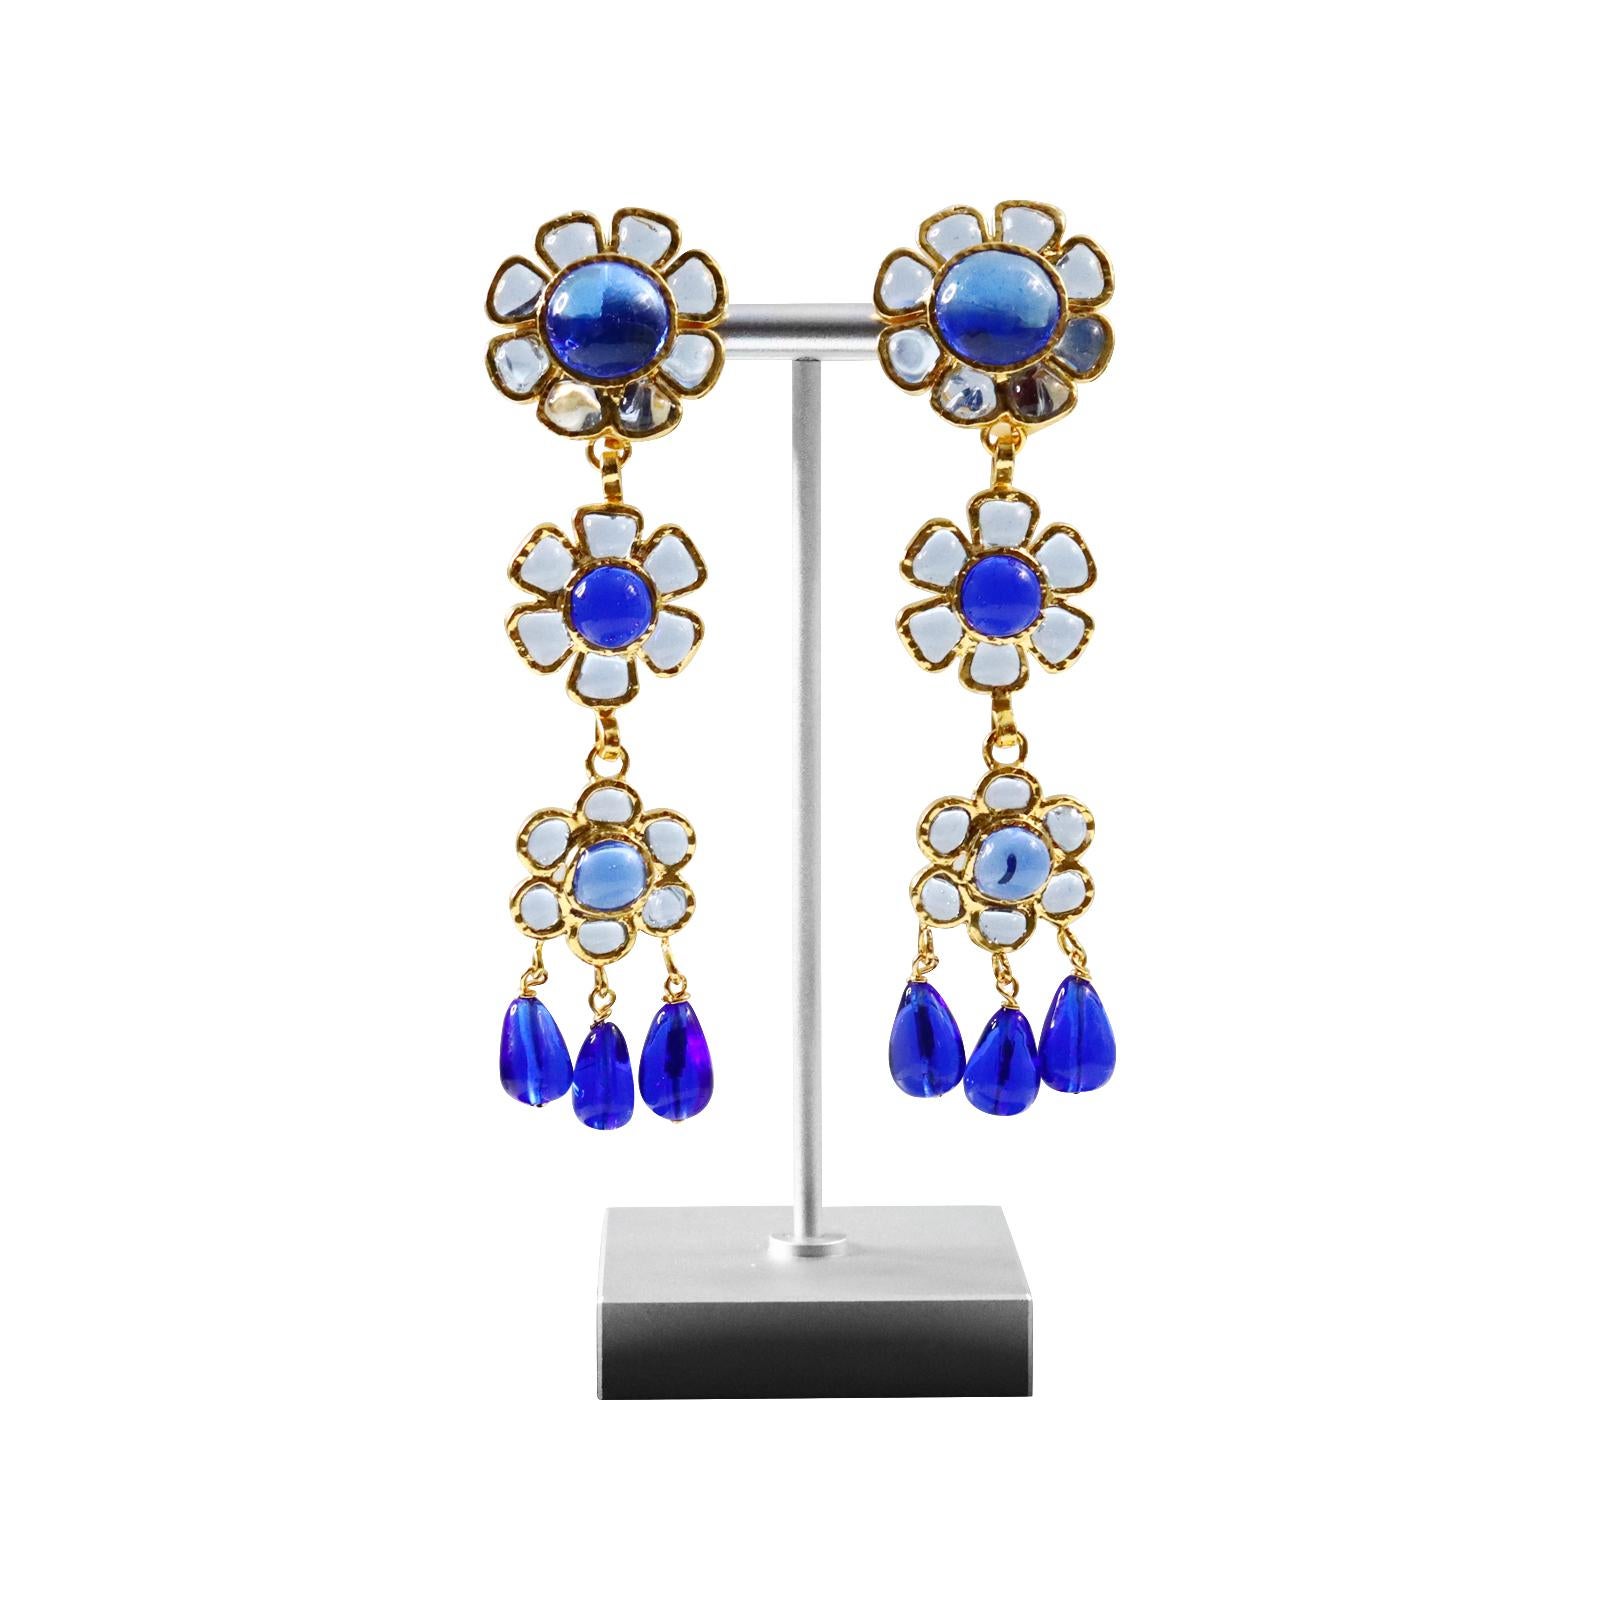 Maison Gripoix Vintage Blue and Light Blue Flower Dangling Earrings Circa 1980s For Sale 4